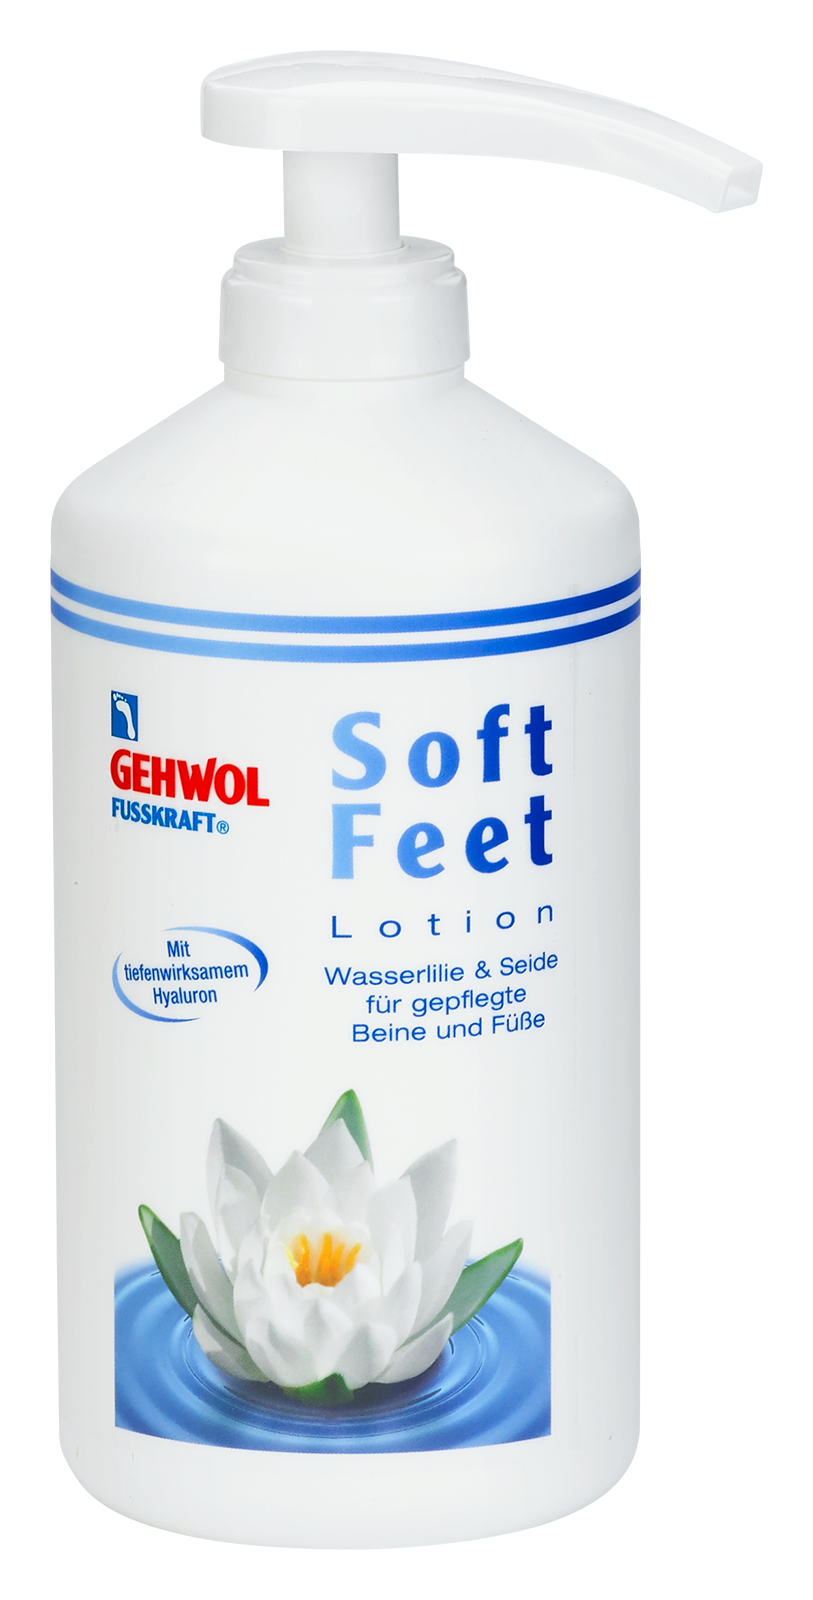 Se Gehwol Fusskraft soft feet lotion 500 ml med pumpe hos Netcreme